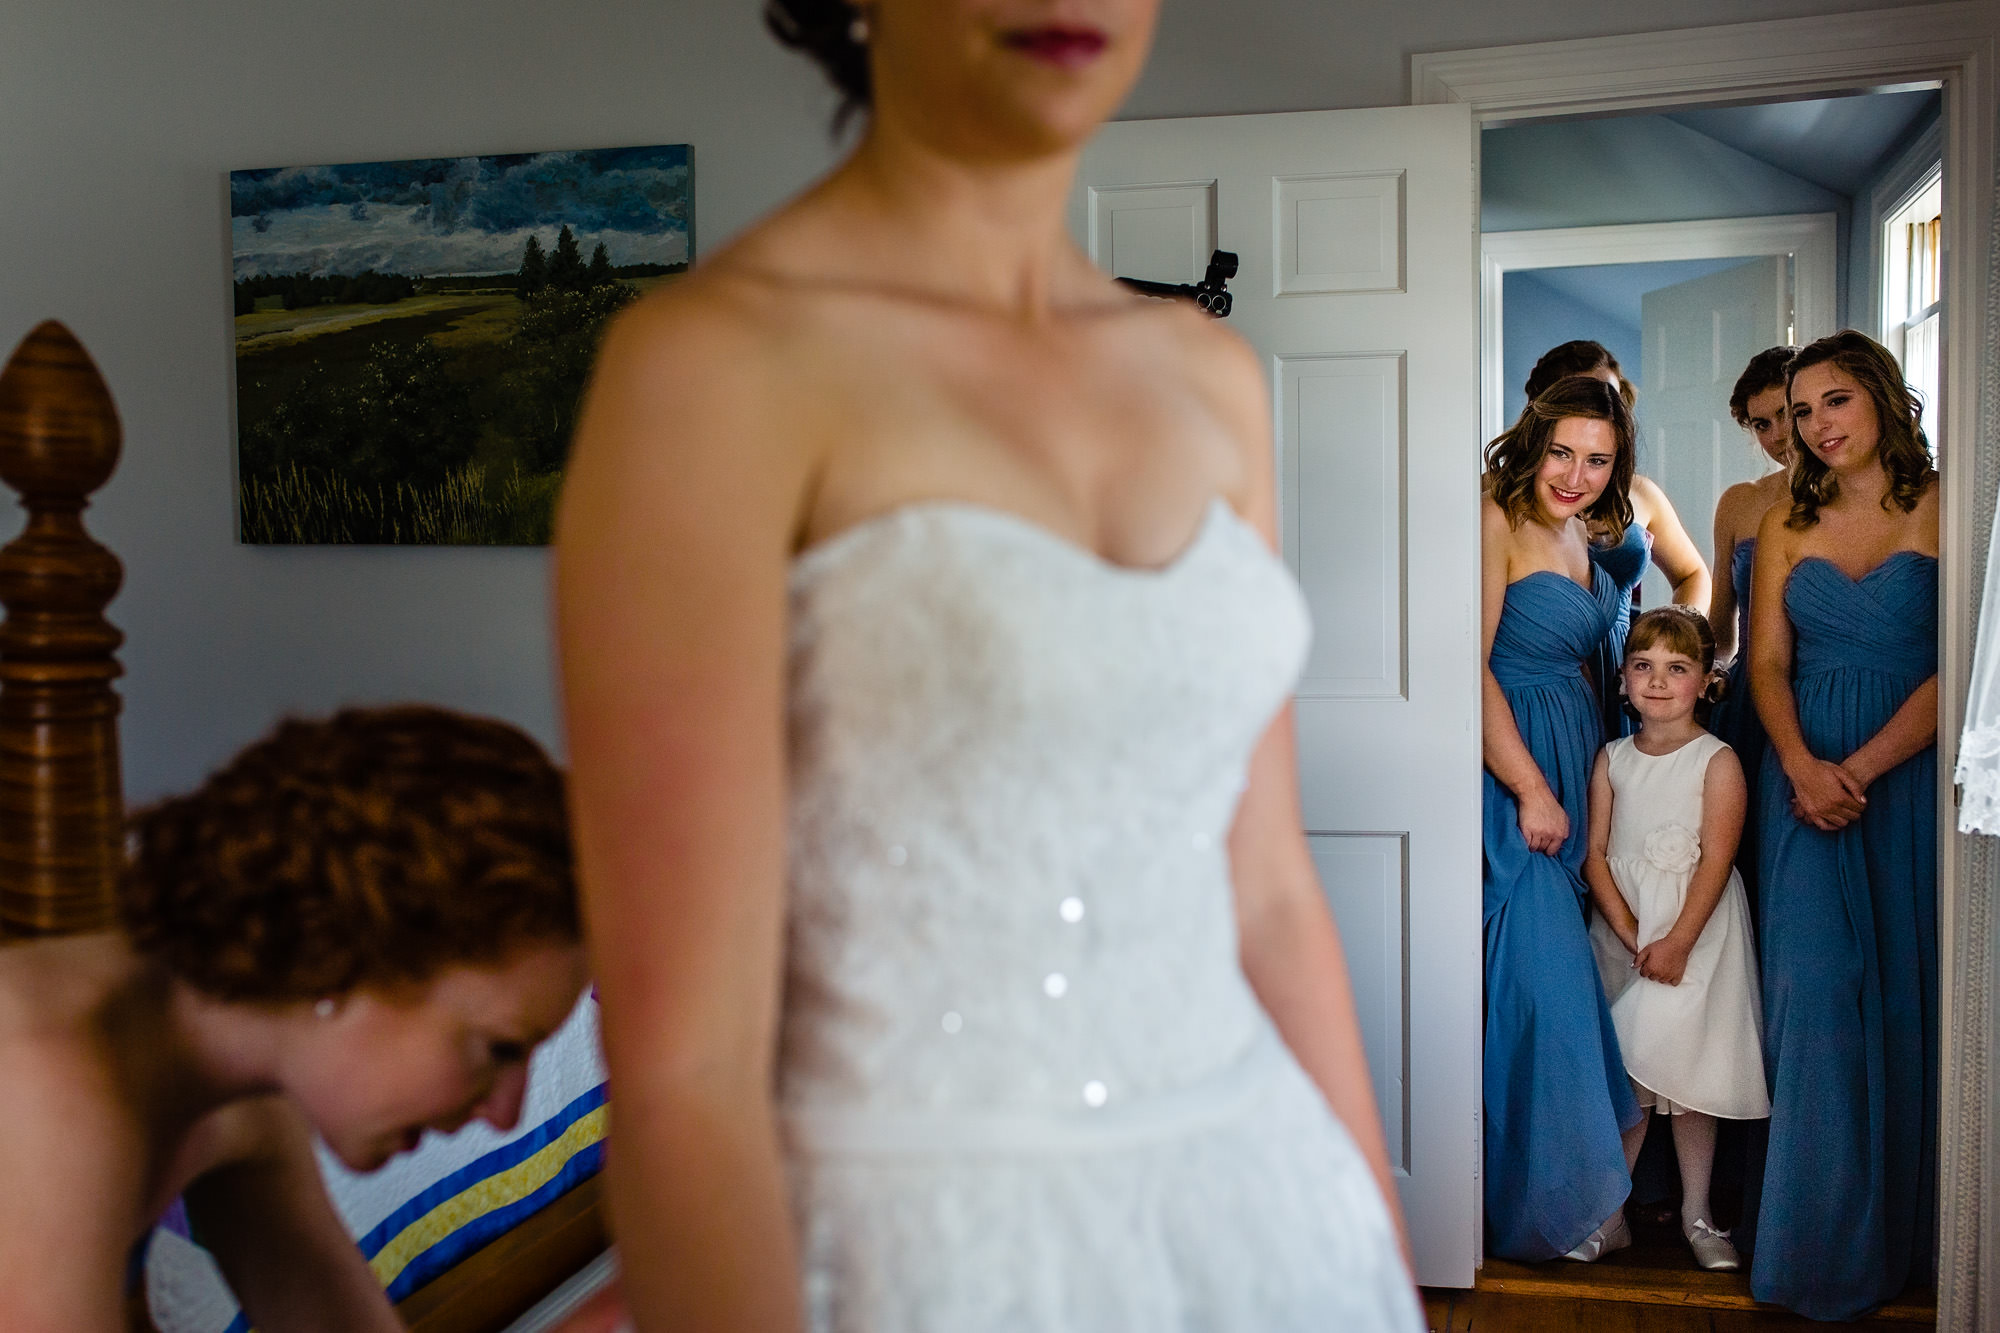 A bride puts on her wedding dress at her Maine island wedding